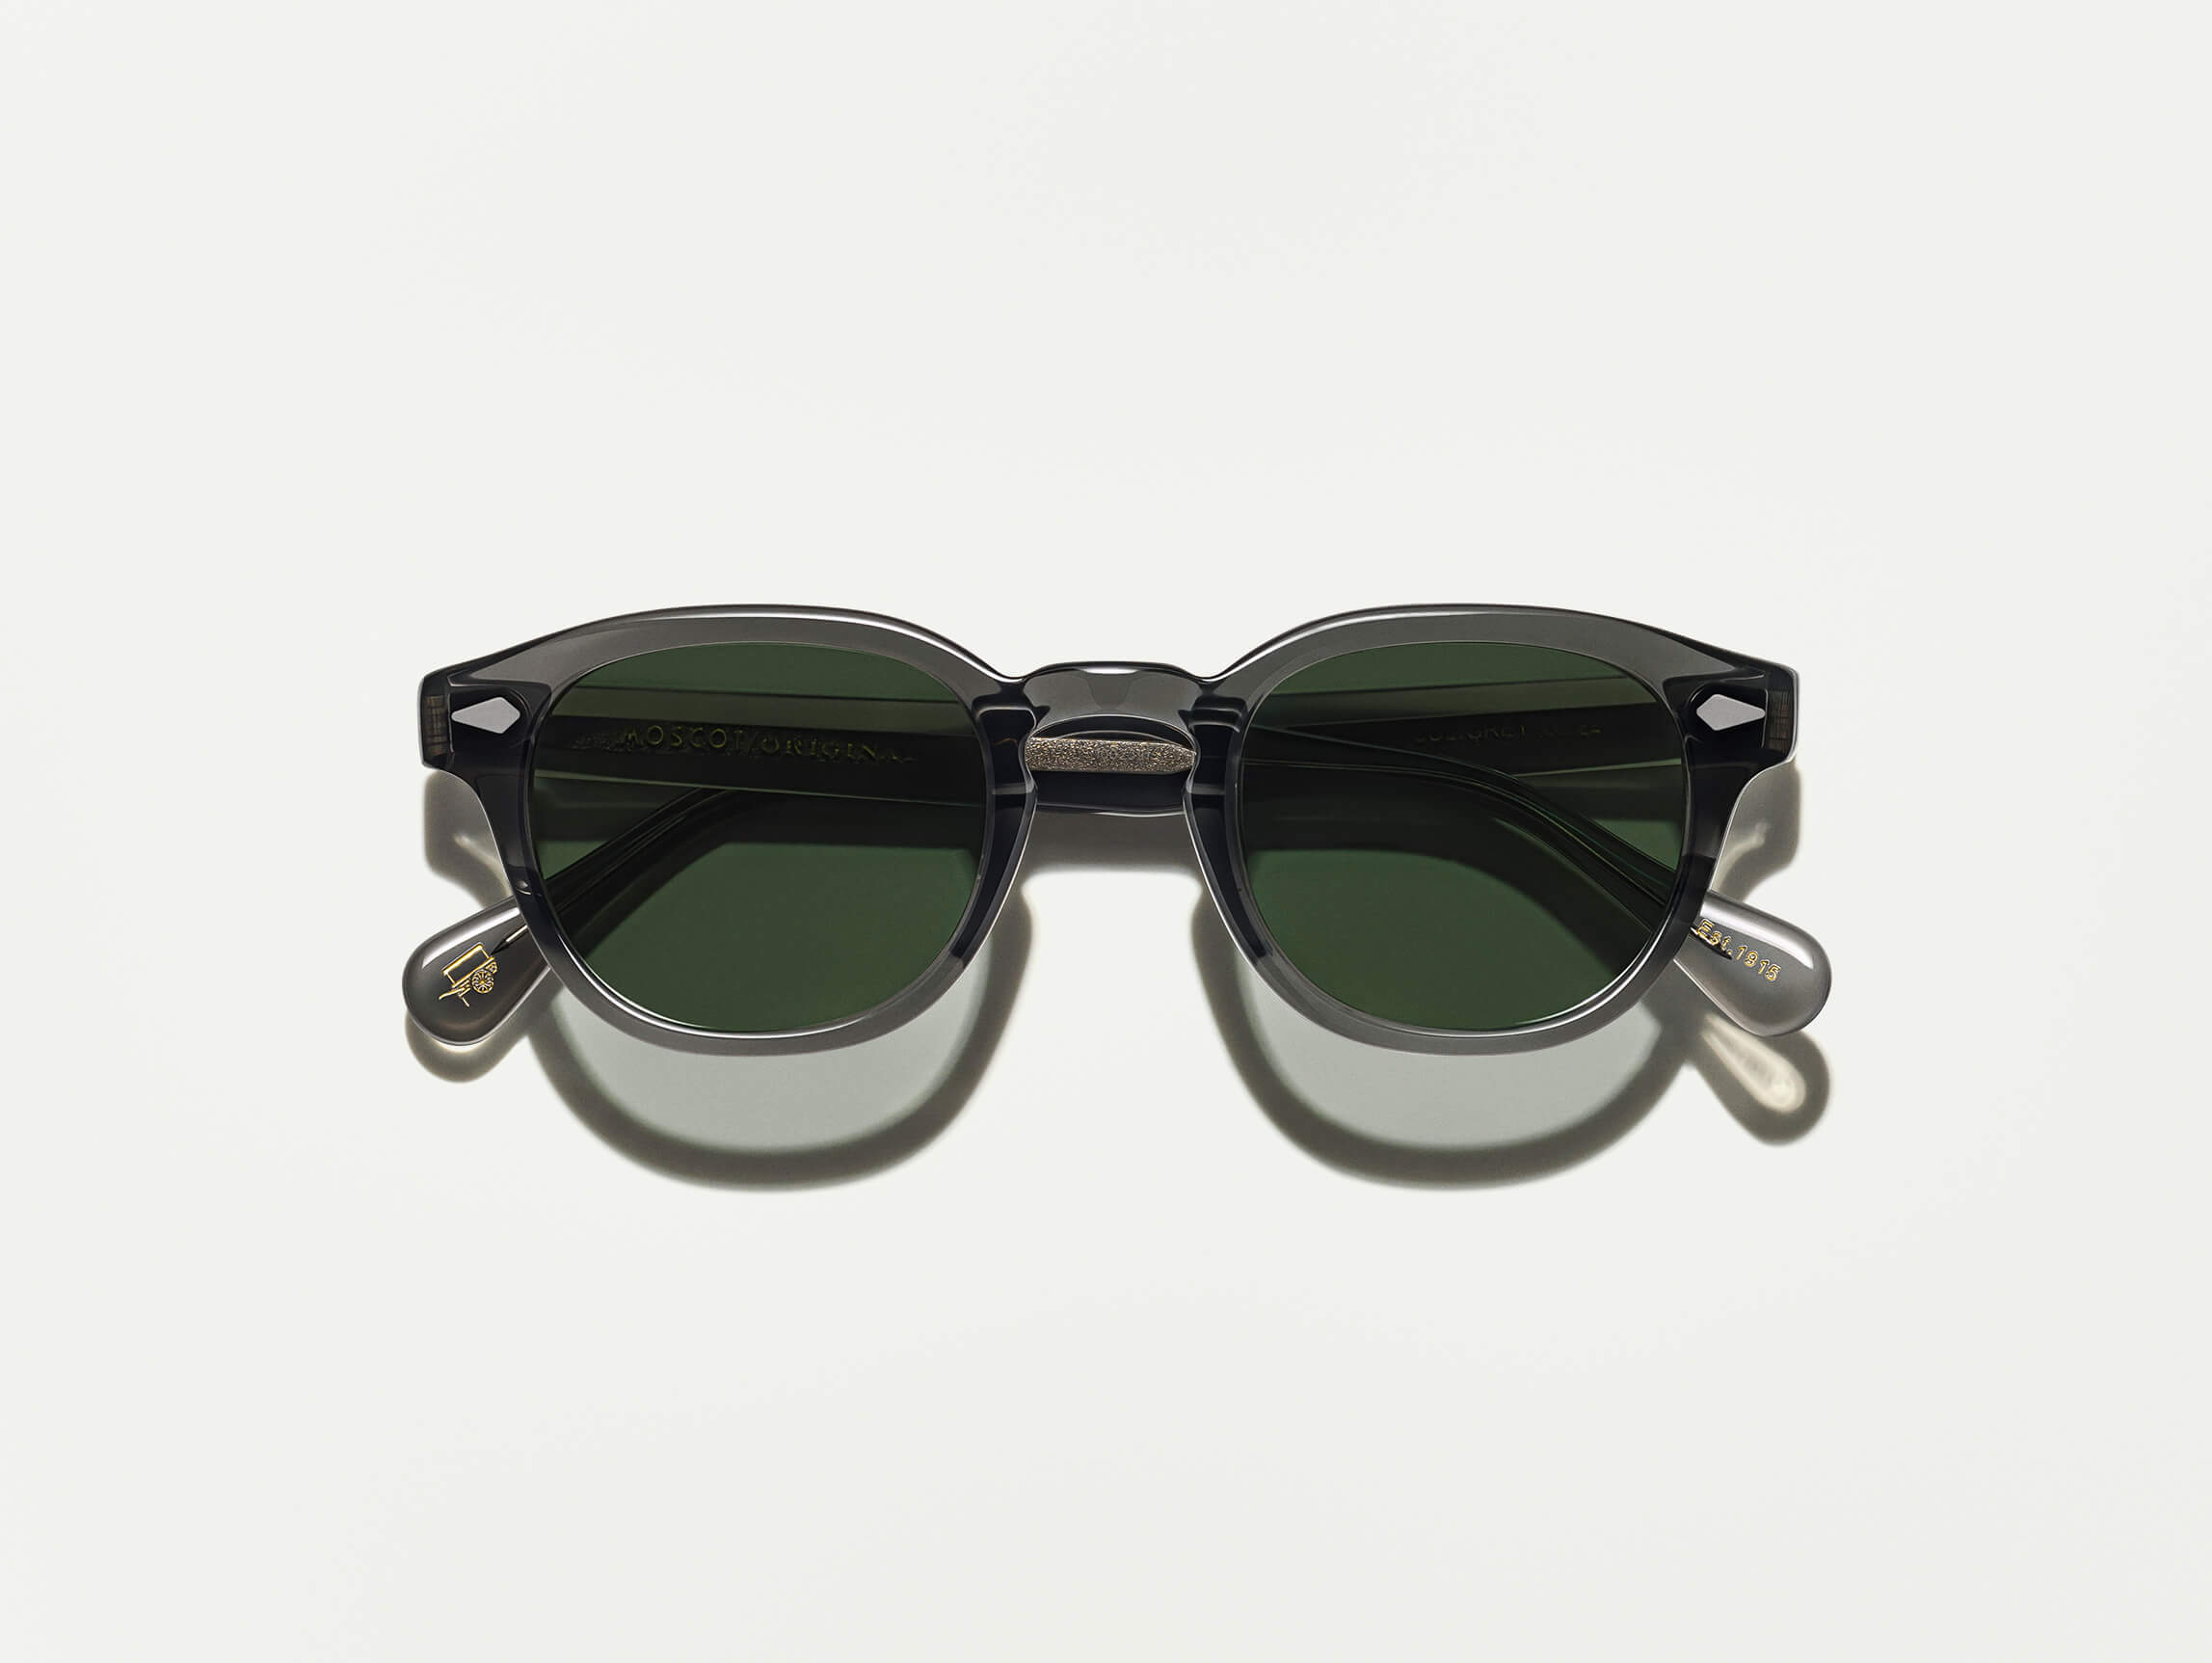 Buy Equal Grey Colour Sunglasses Aviator Shape Full Rim Black Frame online